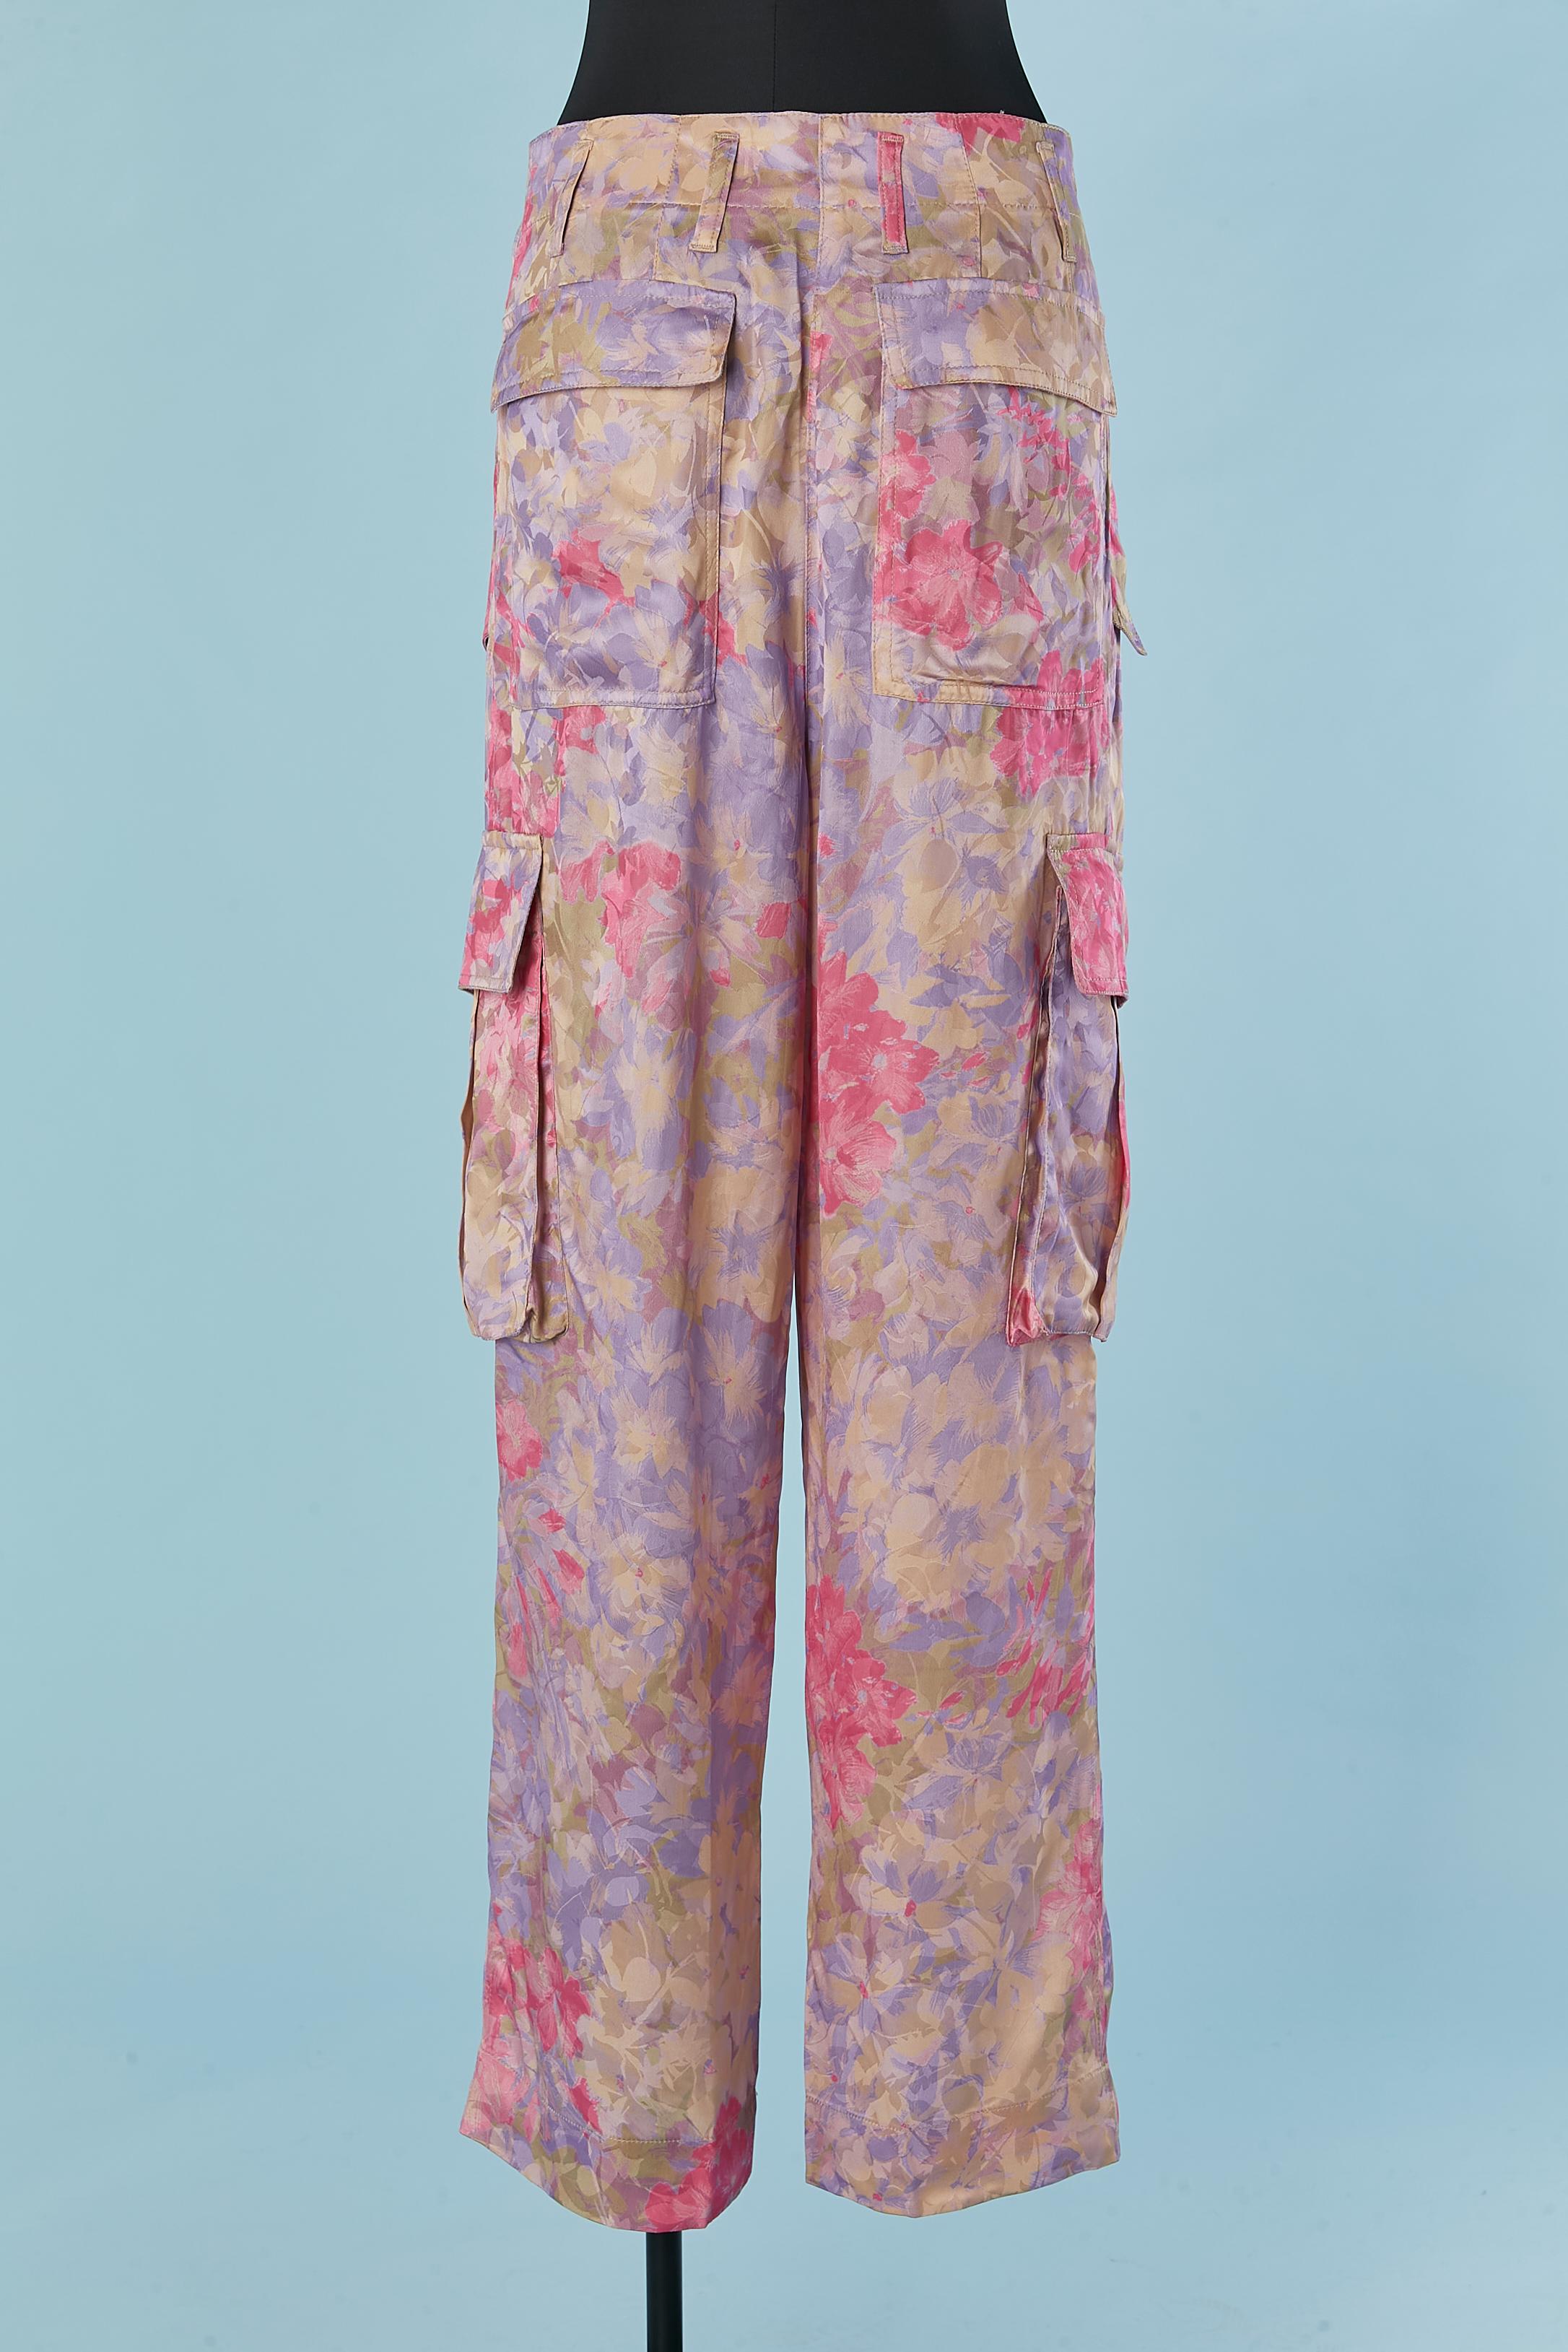 Trouser suit in flower jacquard pattern Dries Van Noten  For Sale 9